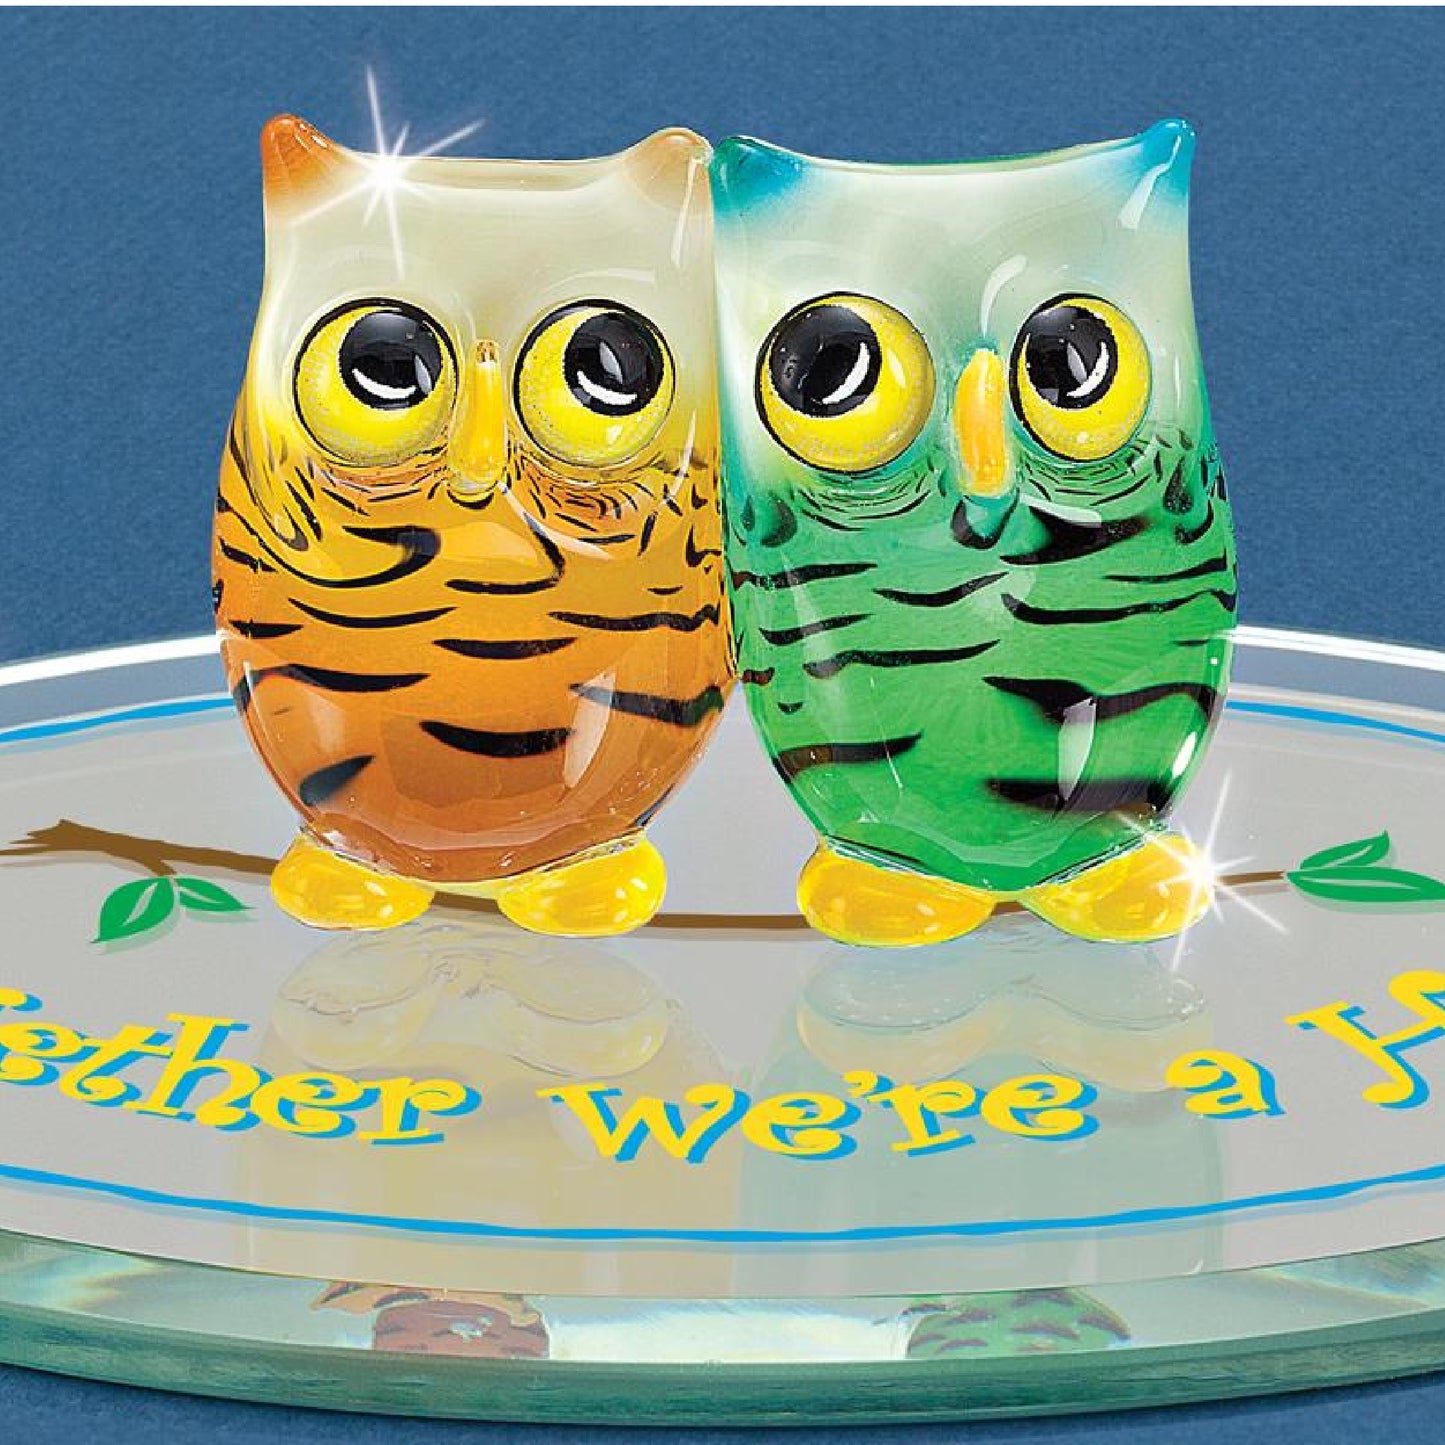 Glass Baron "Together We're A Hoot" Owl Friendship Figurine